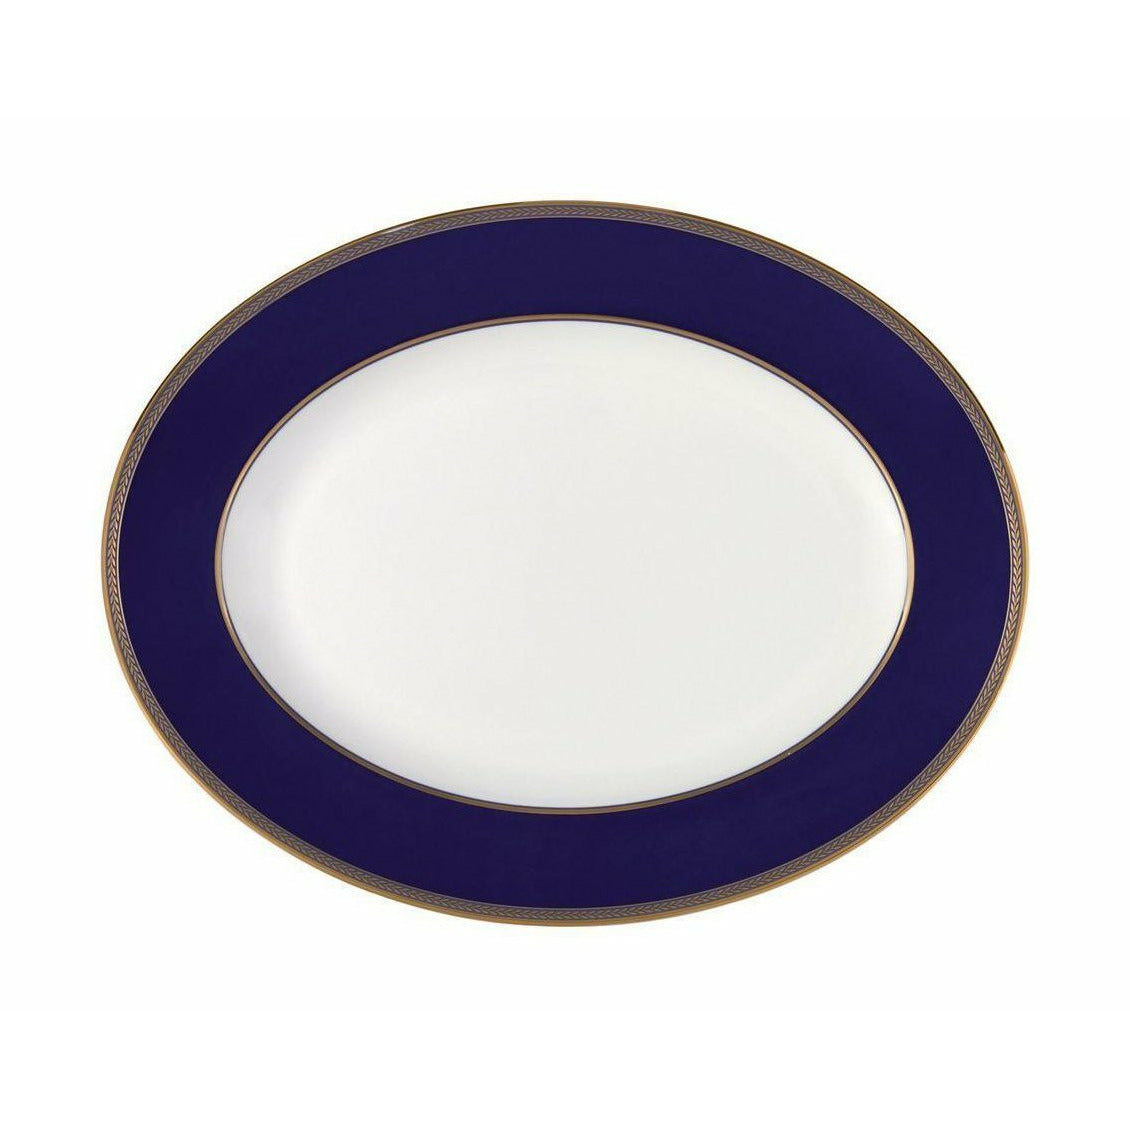 Wedgwood Renaissance Gold Oval Bowl 35 Cm, White/Blue